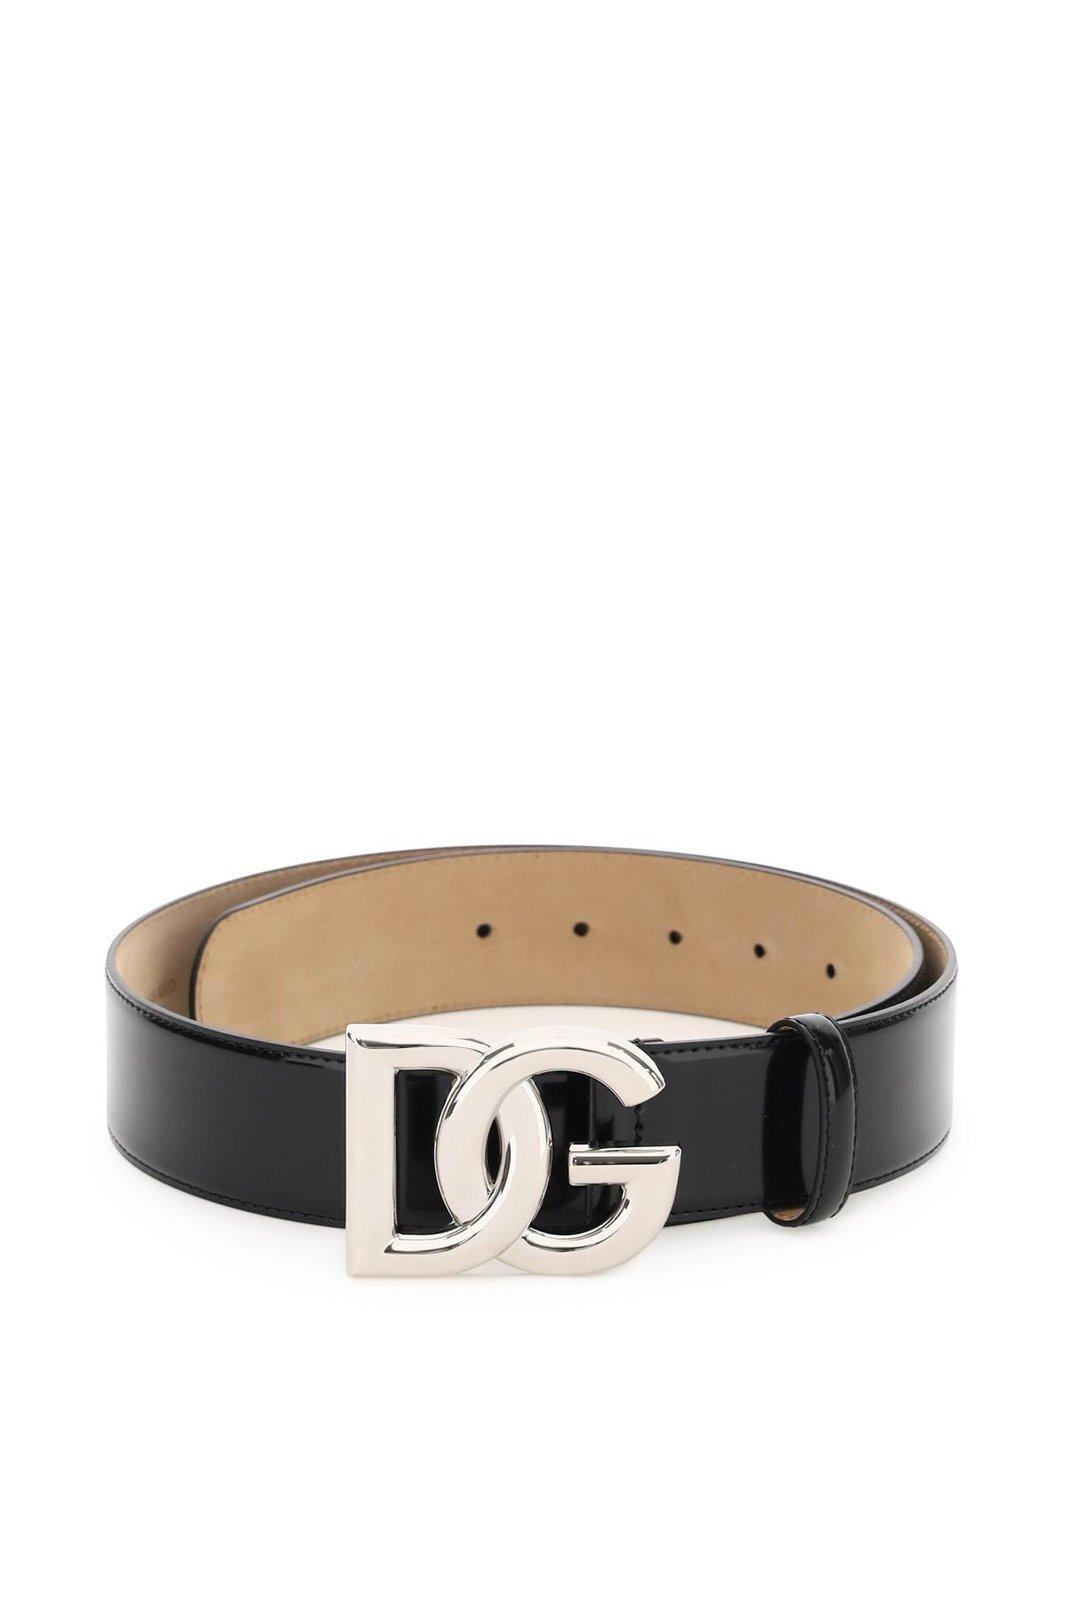 Dolce & Gabbana Dg Logo Shiny Belt